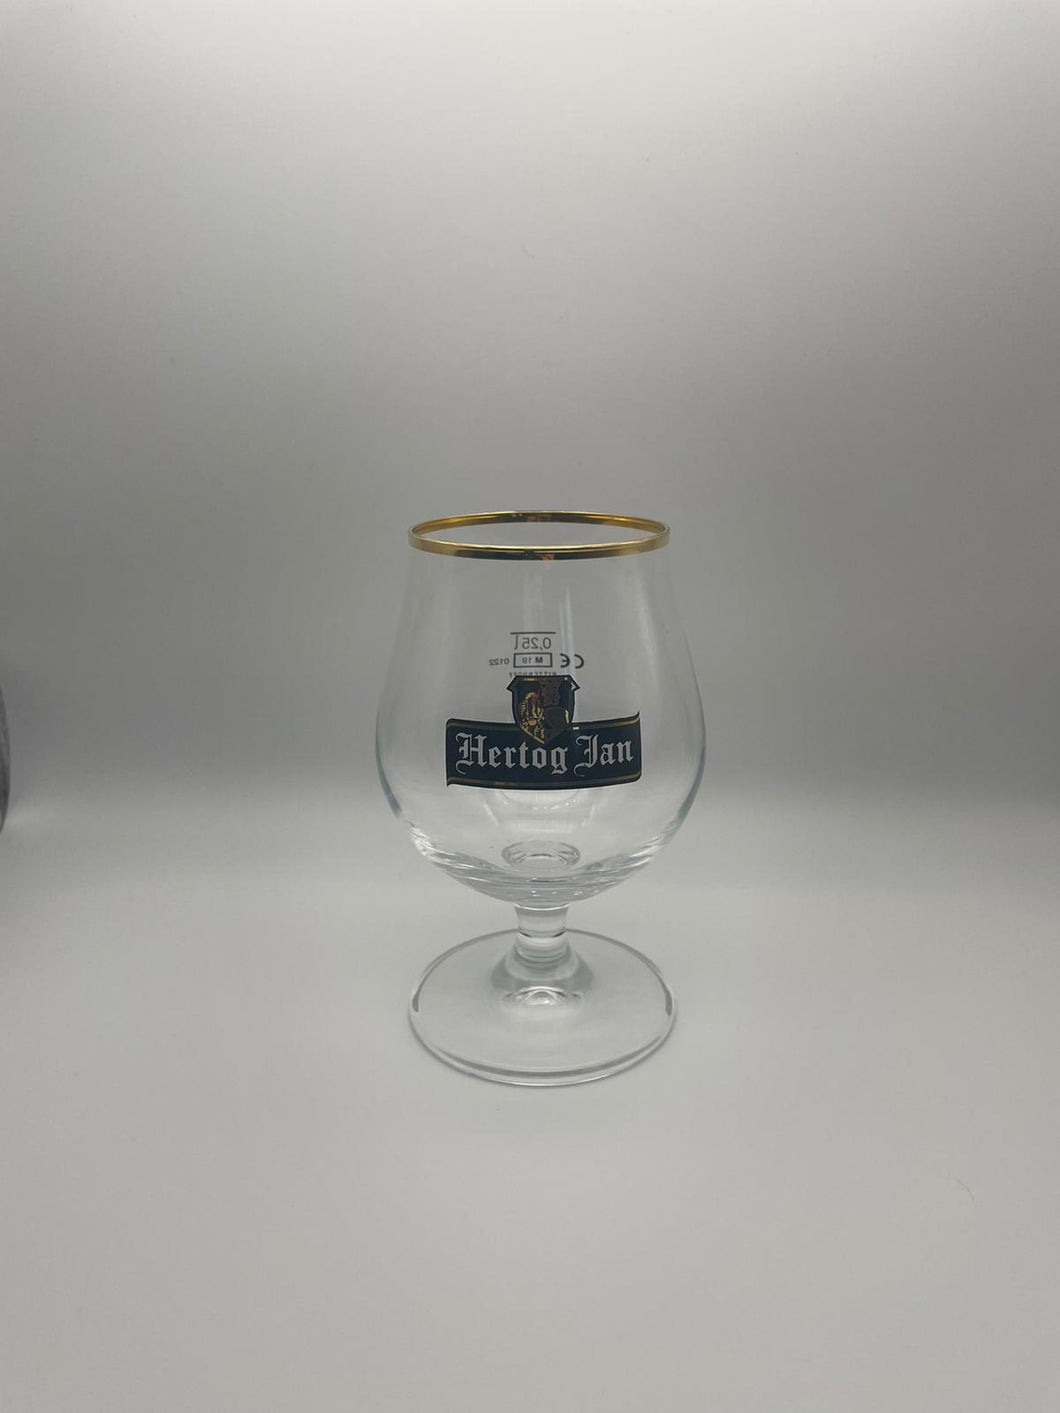 Hertog Jan Beer Goblet 25cl Chalice Glass